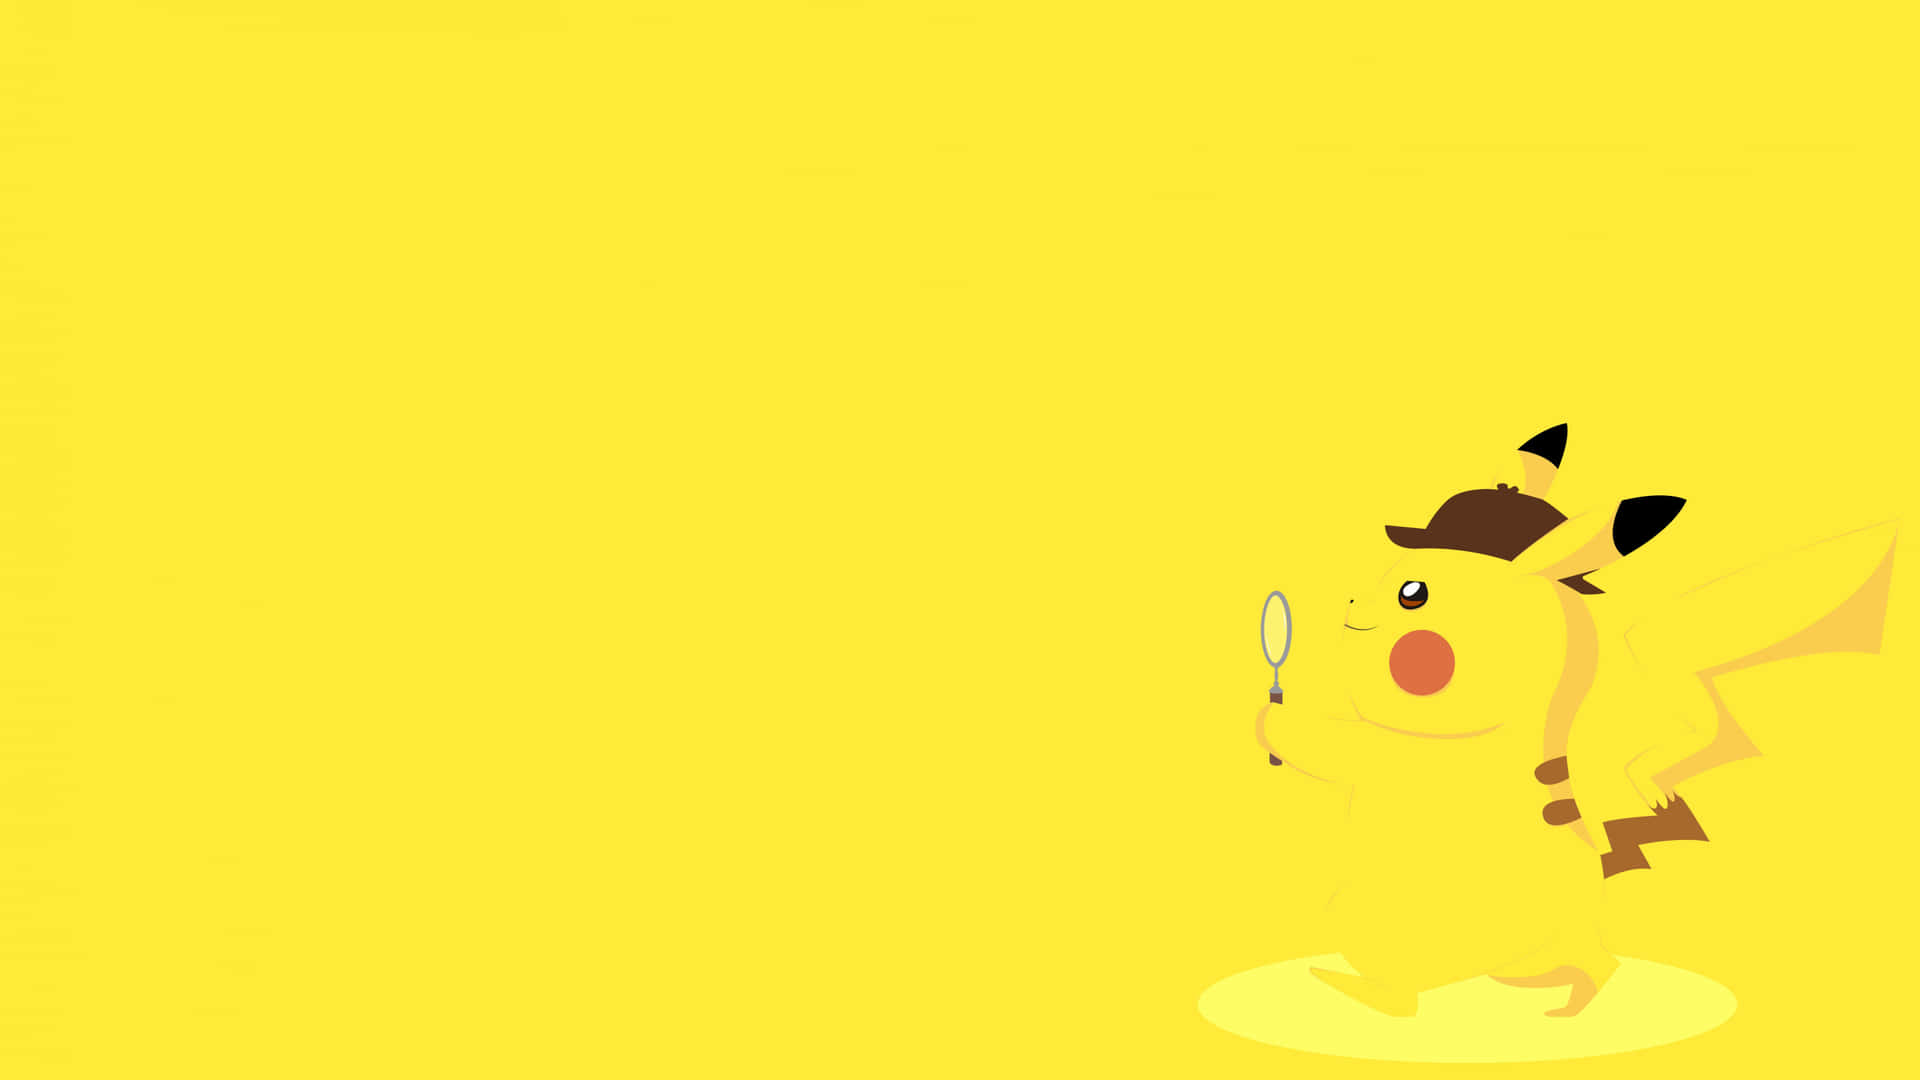 Pikachu,das Super Süße Elektro-pokémon, Bringt Freude Und Glück.